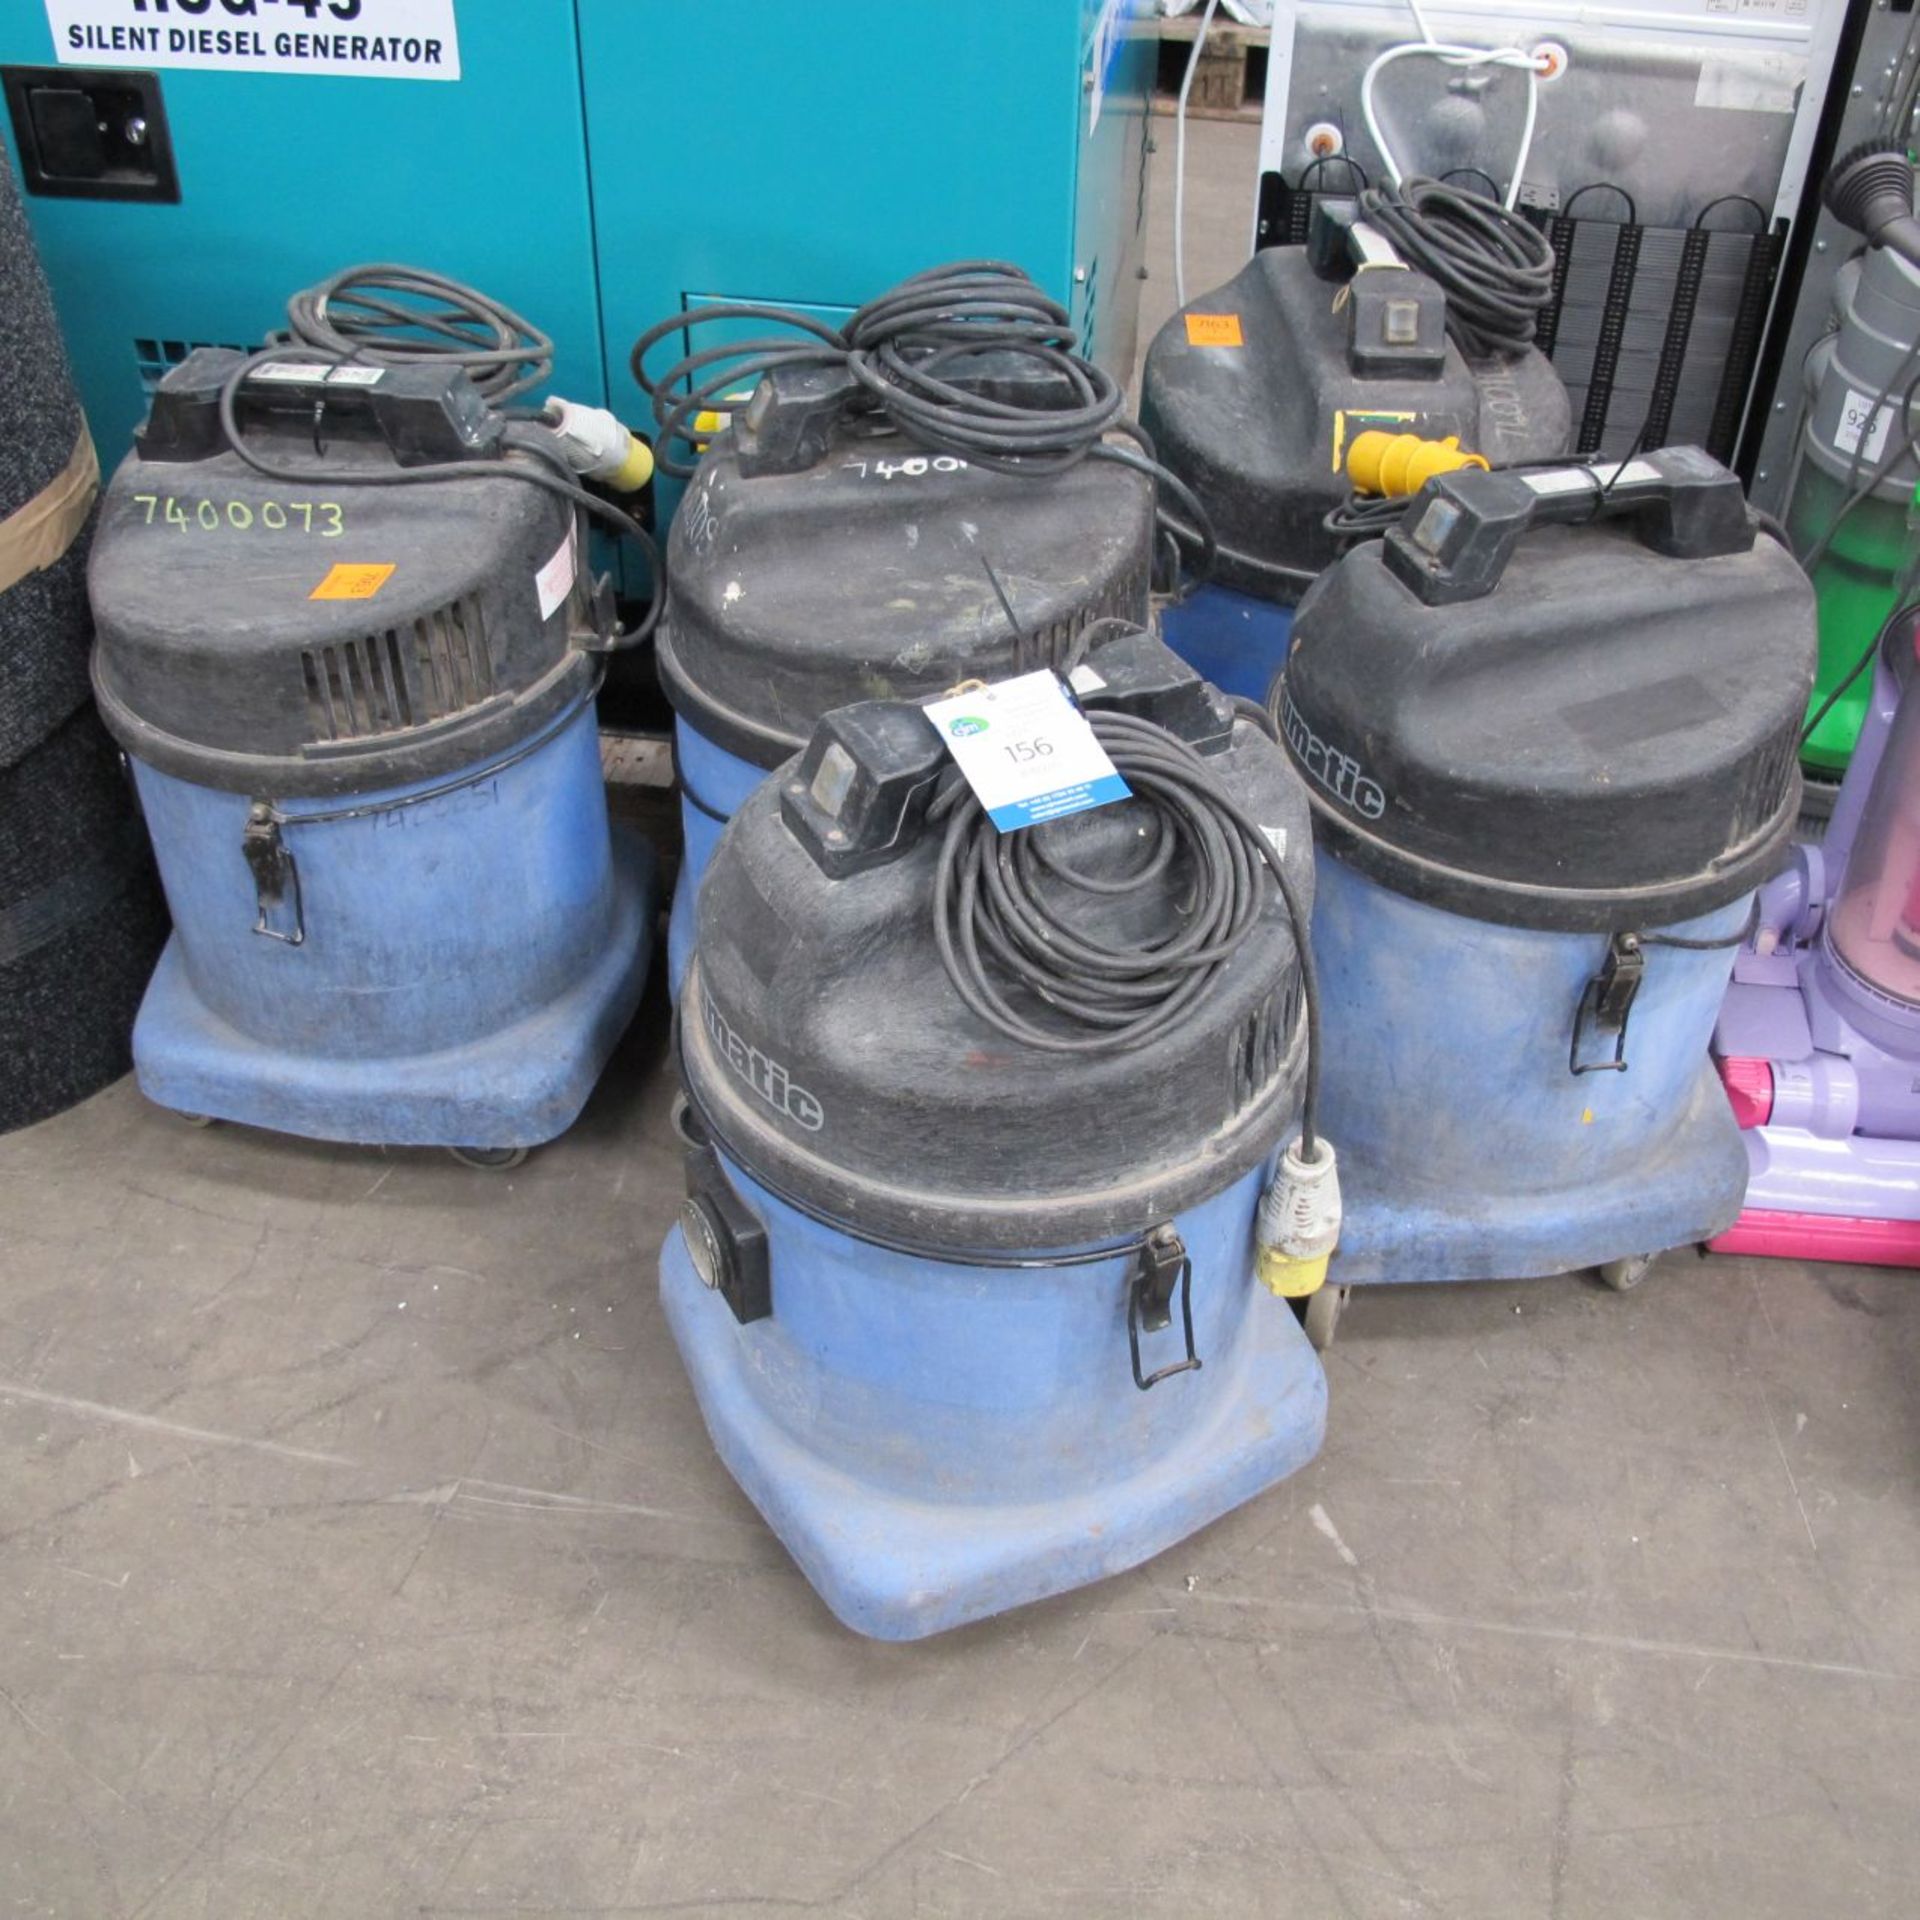 5 x Numatic Industrial Vacuum Cleaners